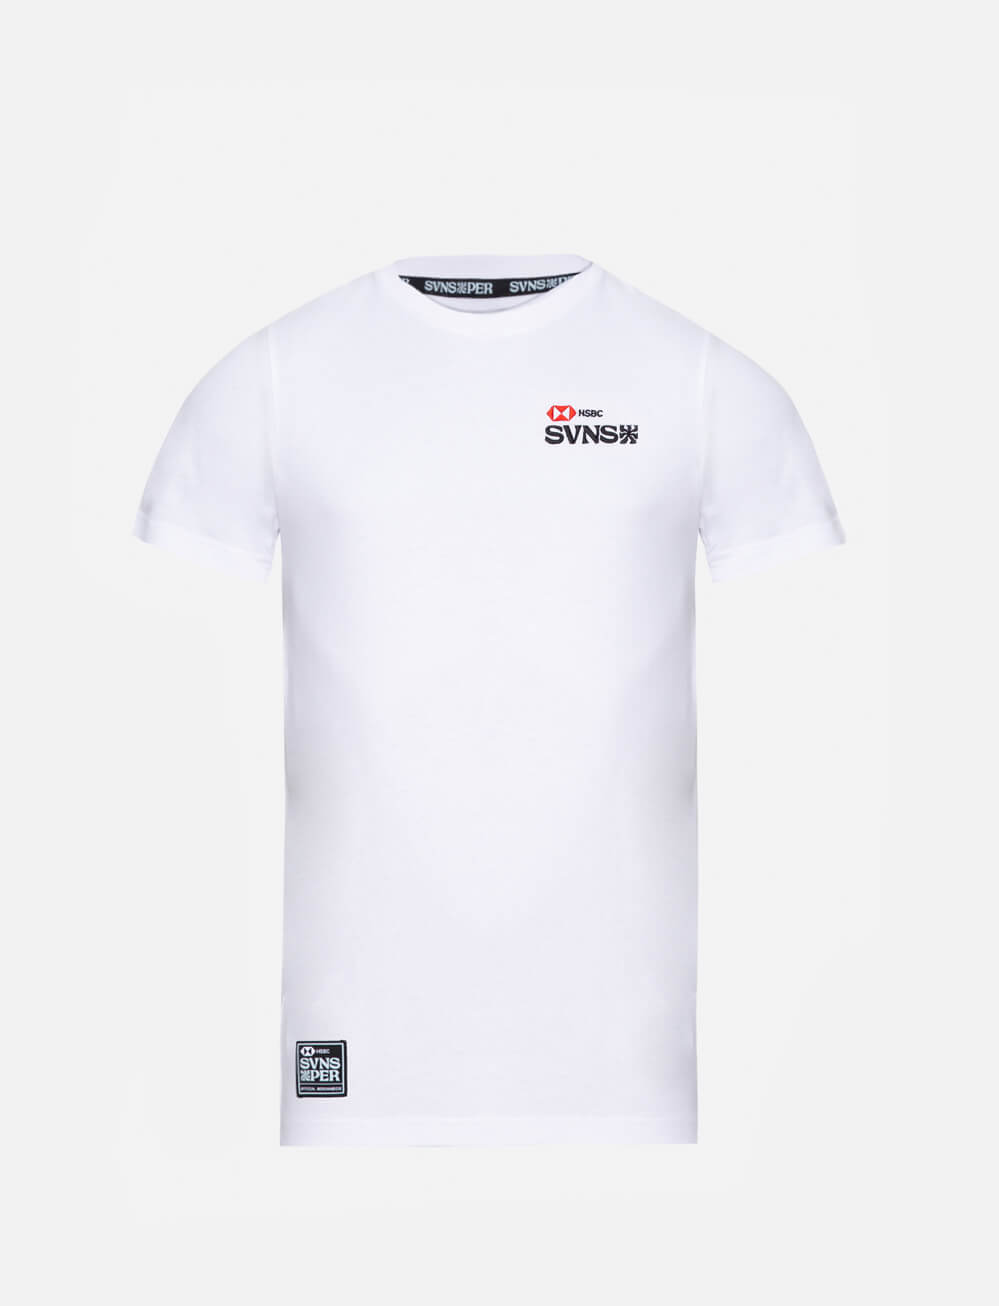 SVNS Perth Global Tour Kids T-Shirt - White